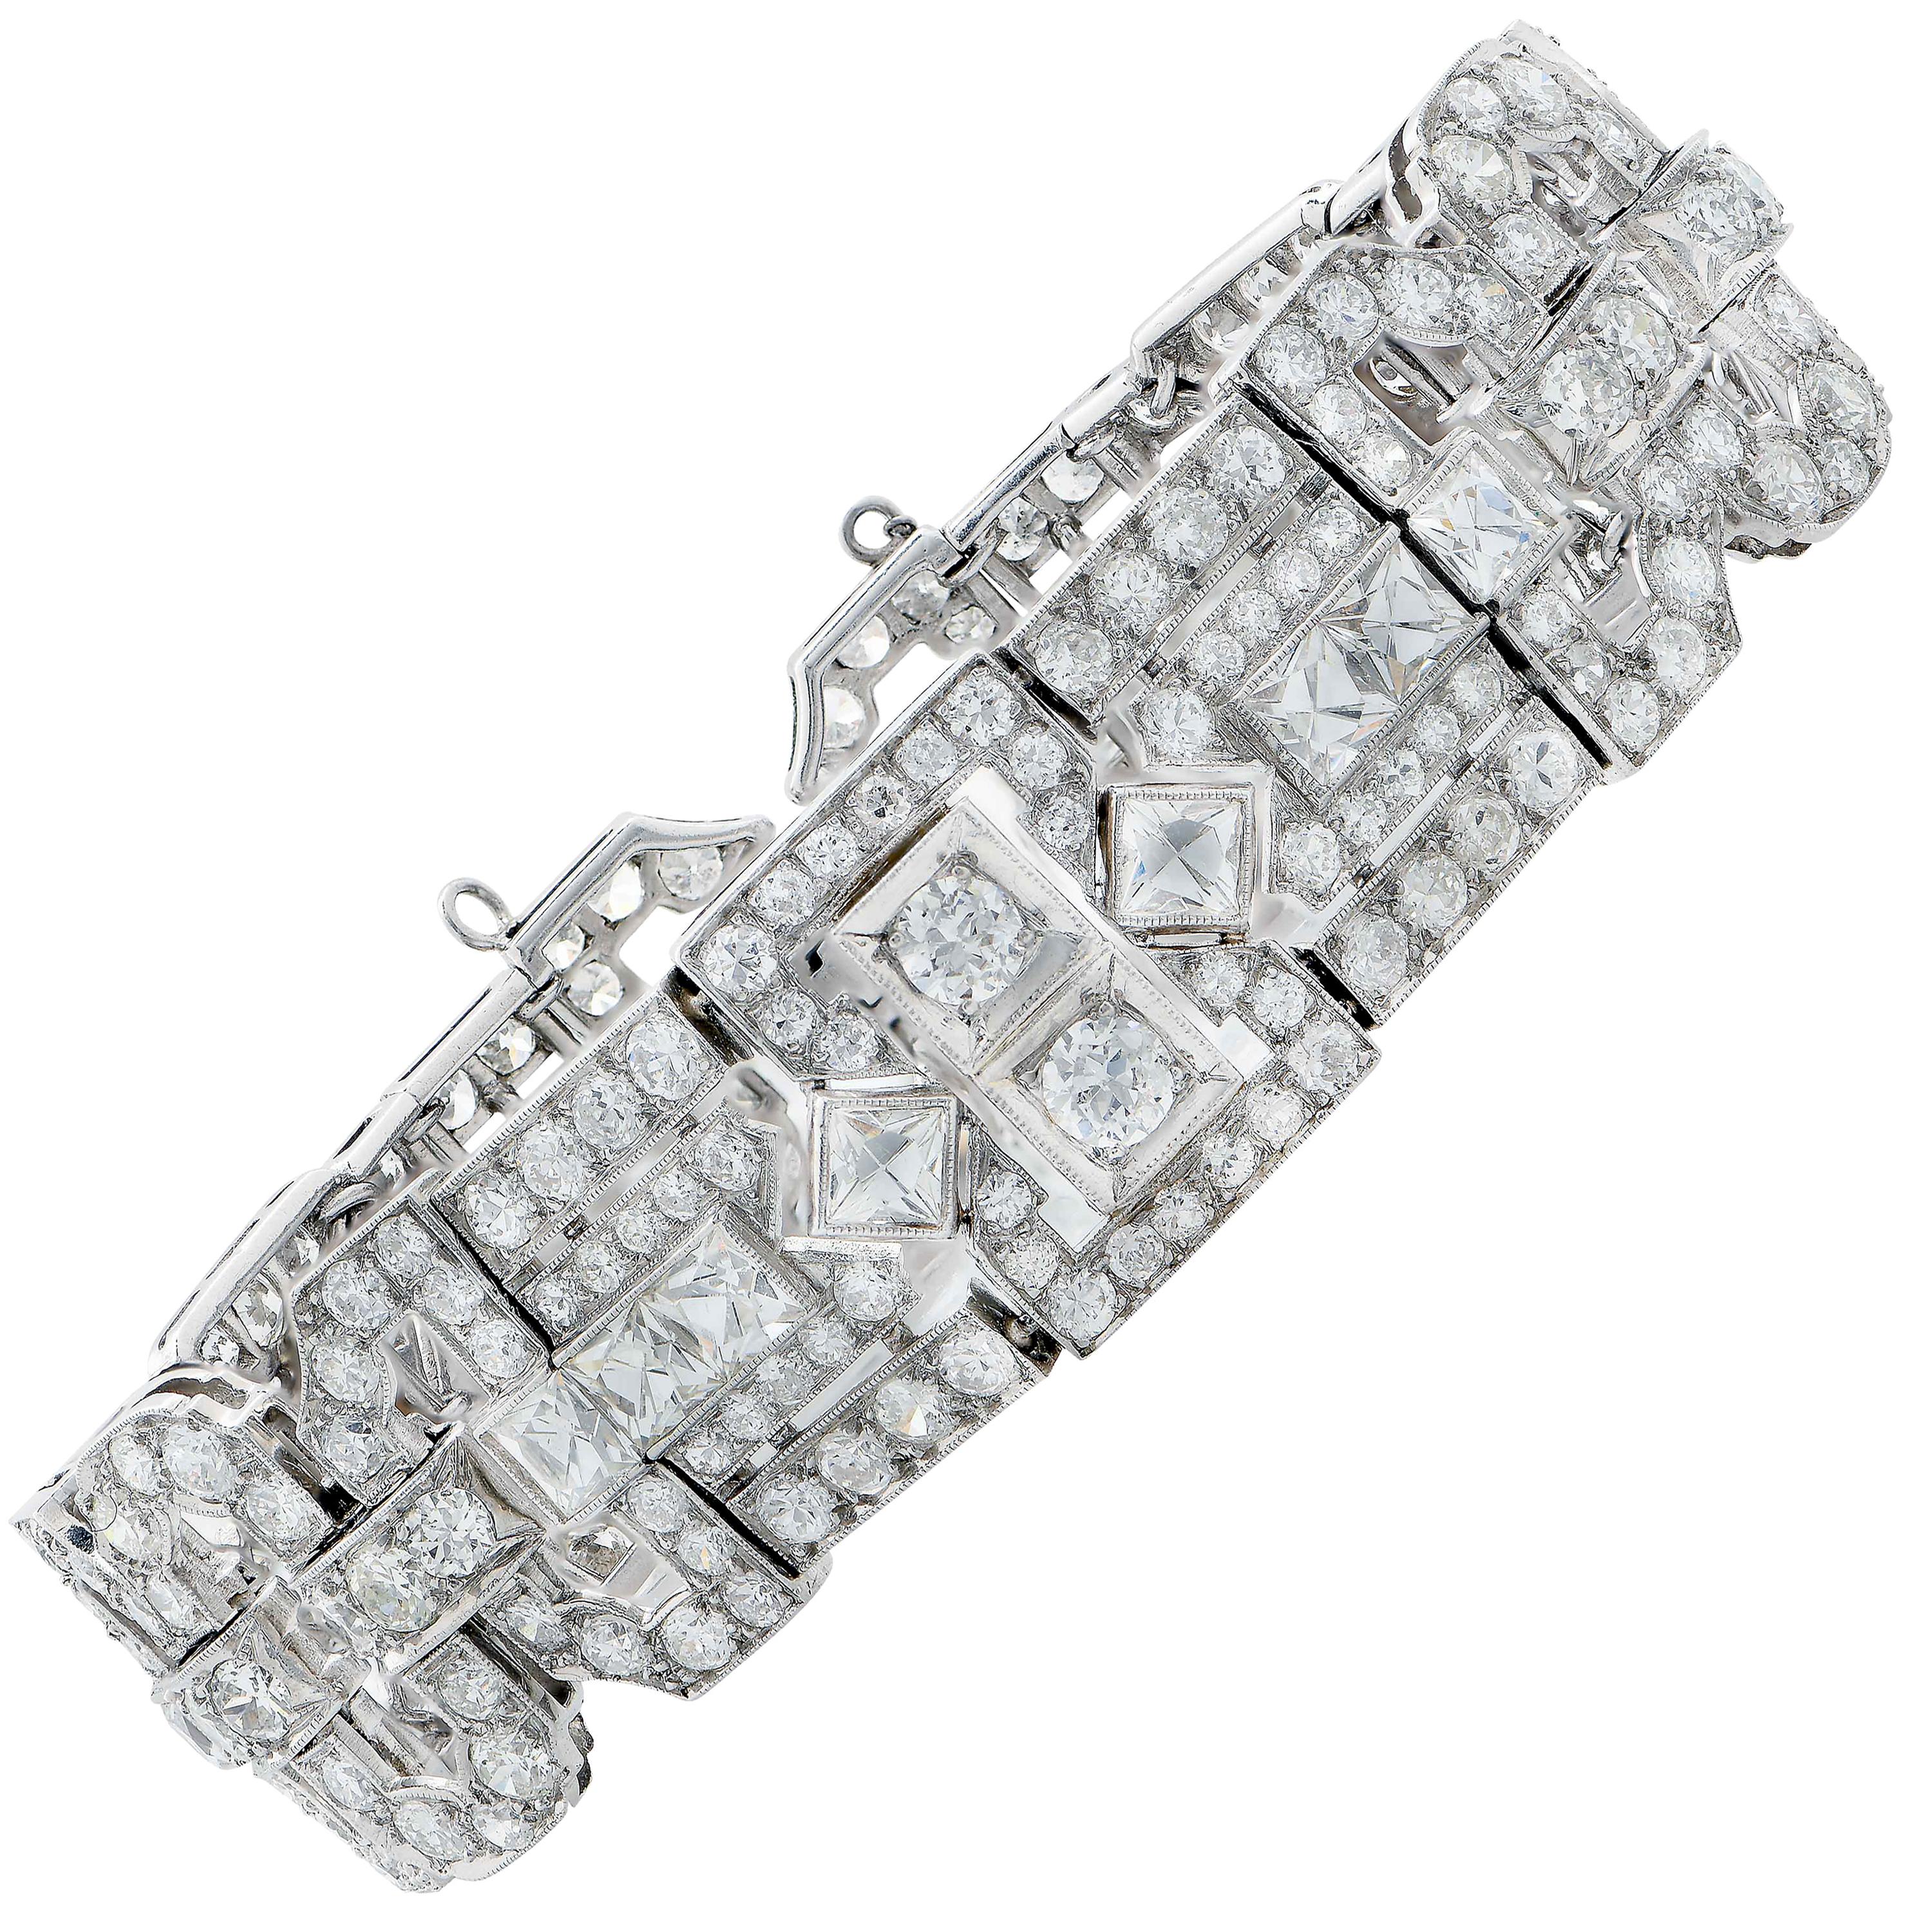 12 Carat Diamond Deco Style Bracelet Set in Platinum